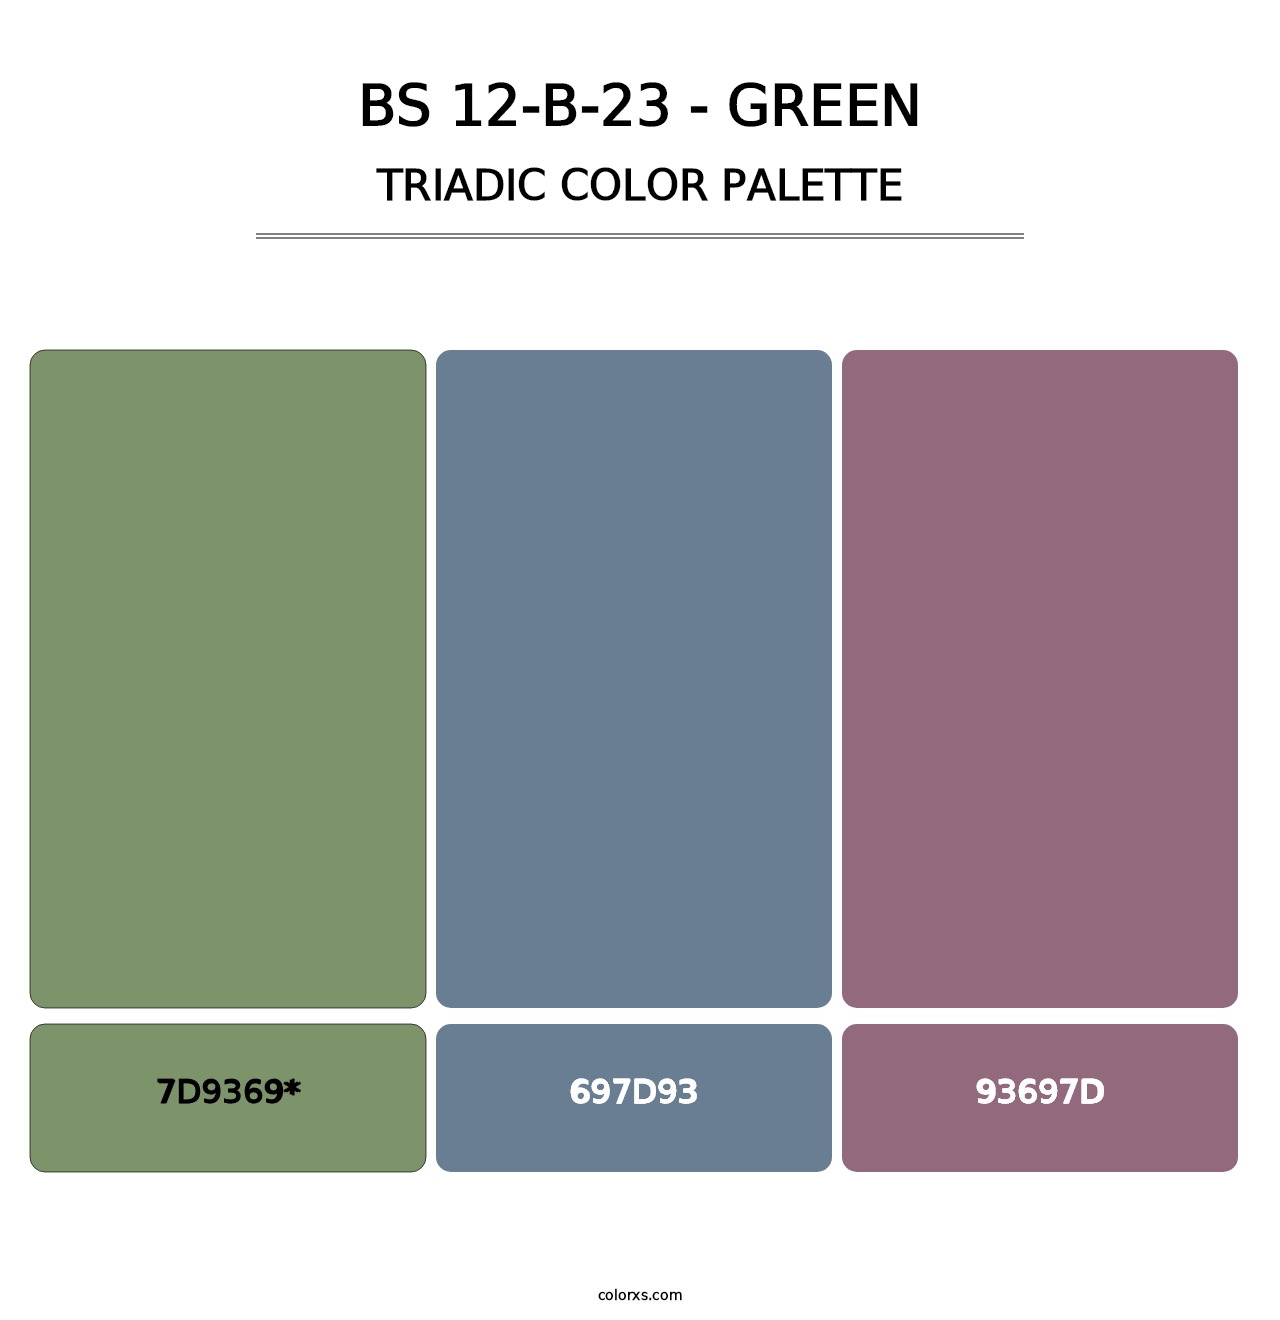 BS 12-B-23 - Green - Triadic Color Palette